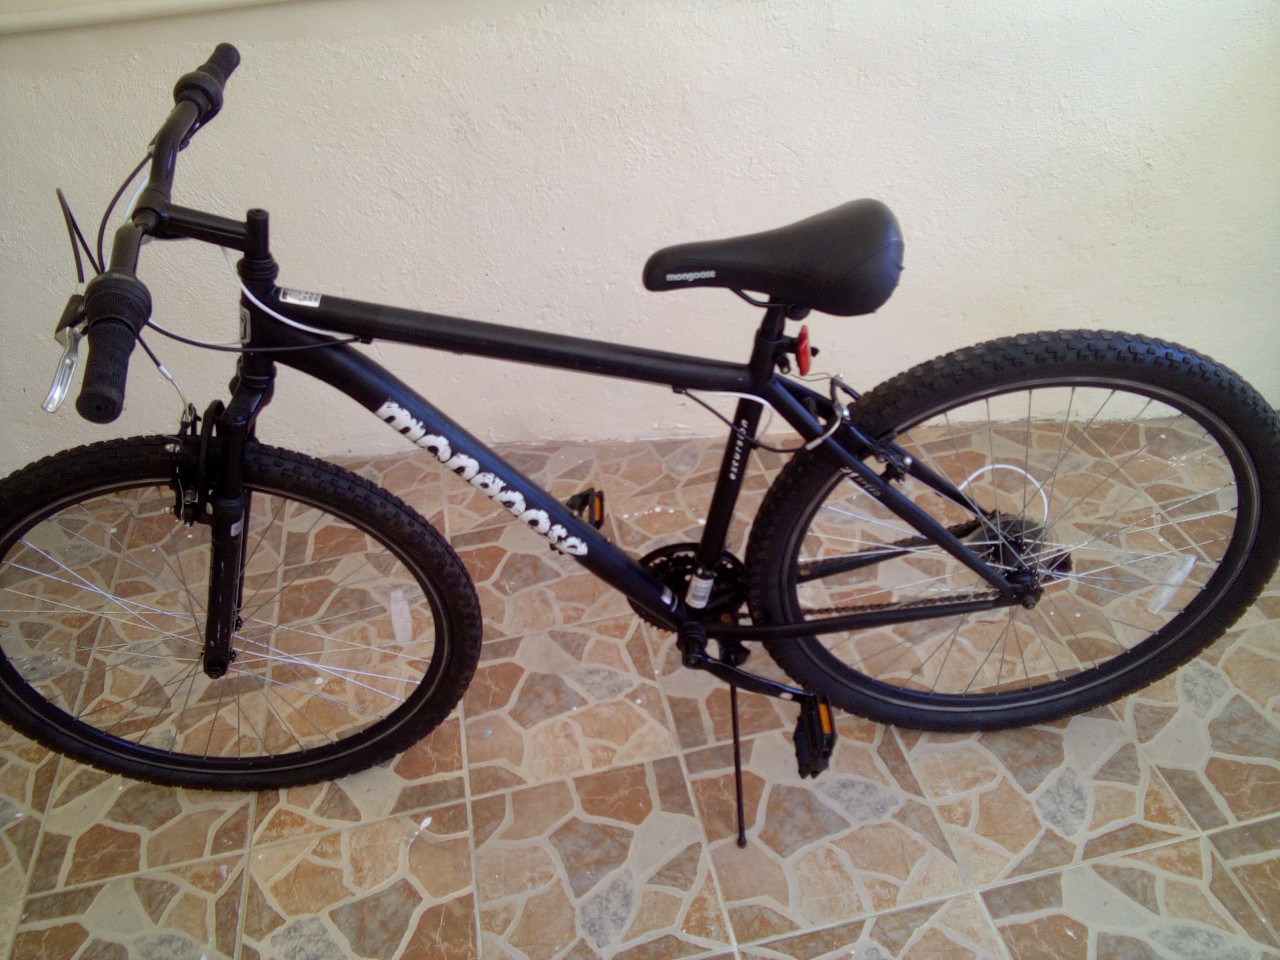 bicicletas y accesorios - Bicicleta moongose aro 29